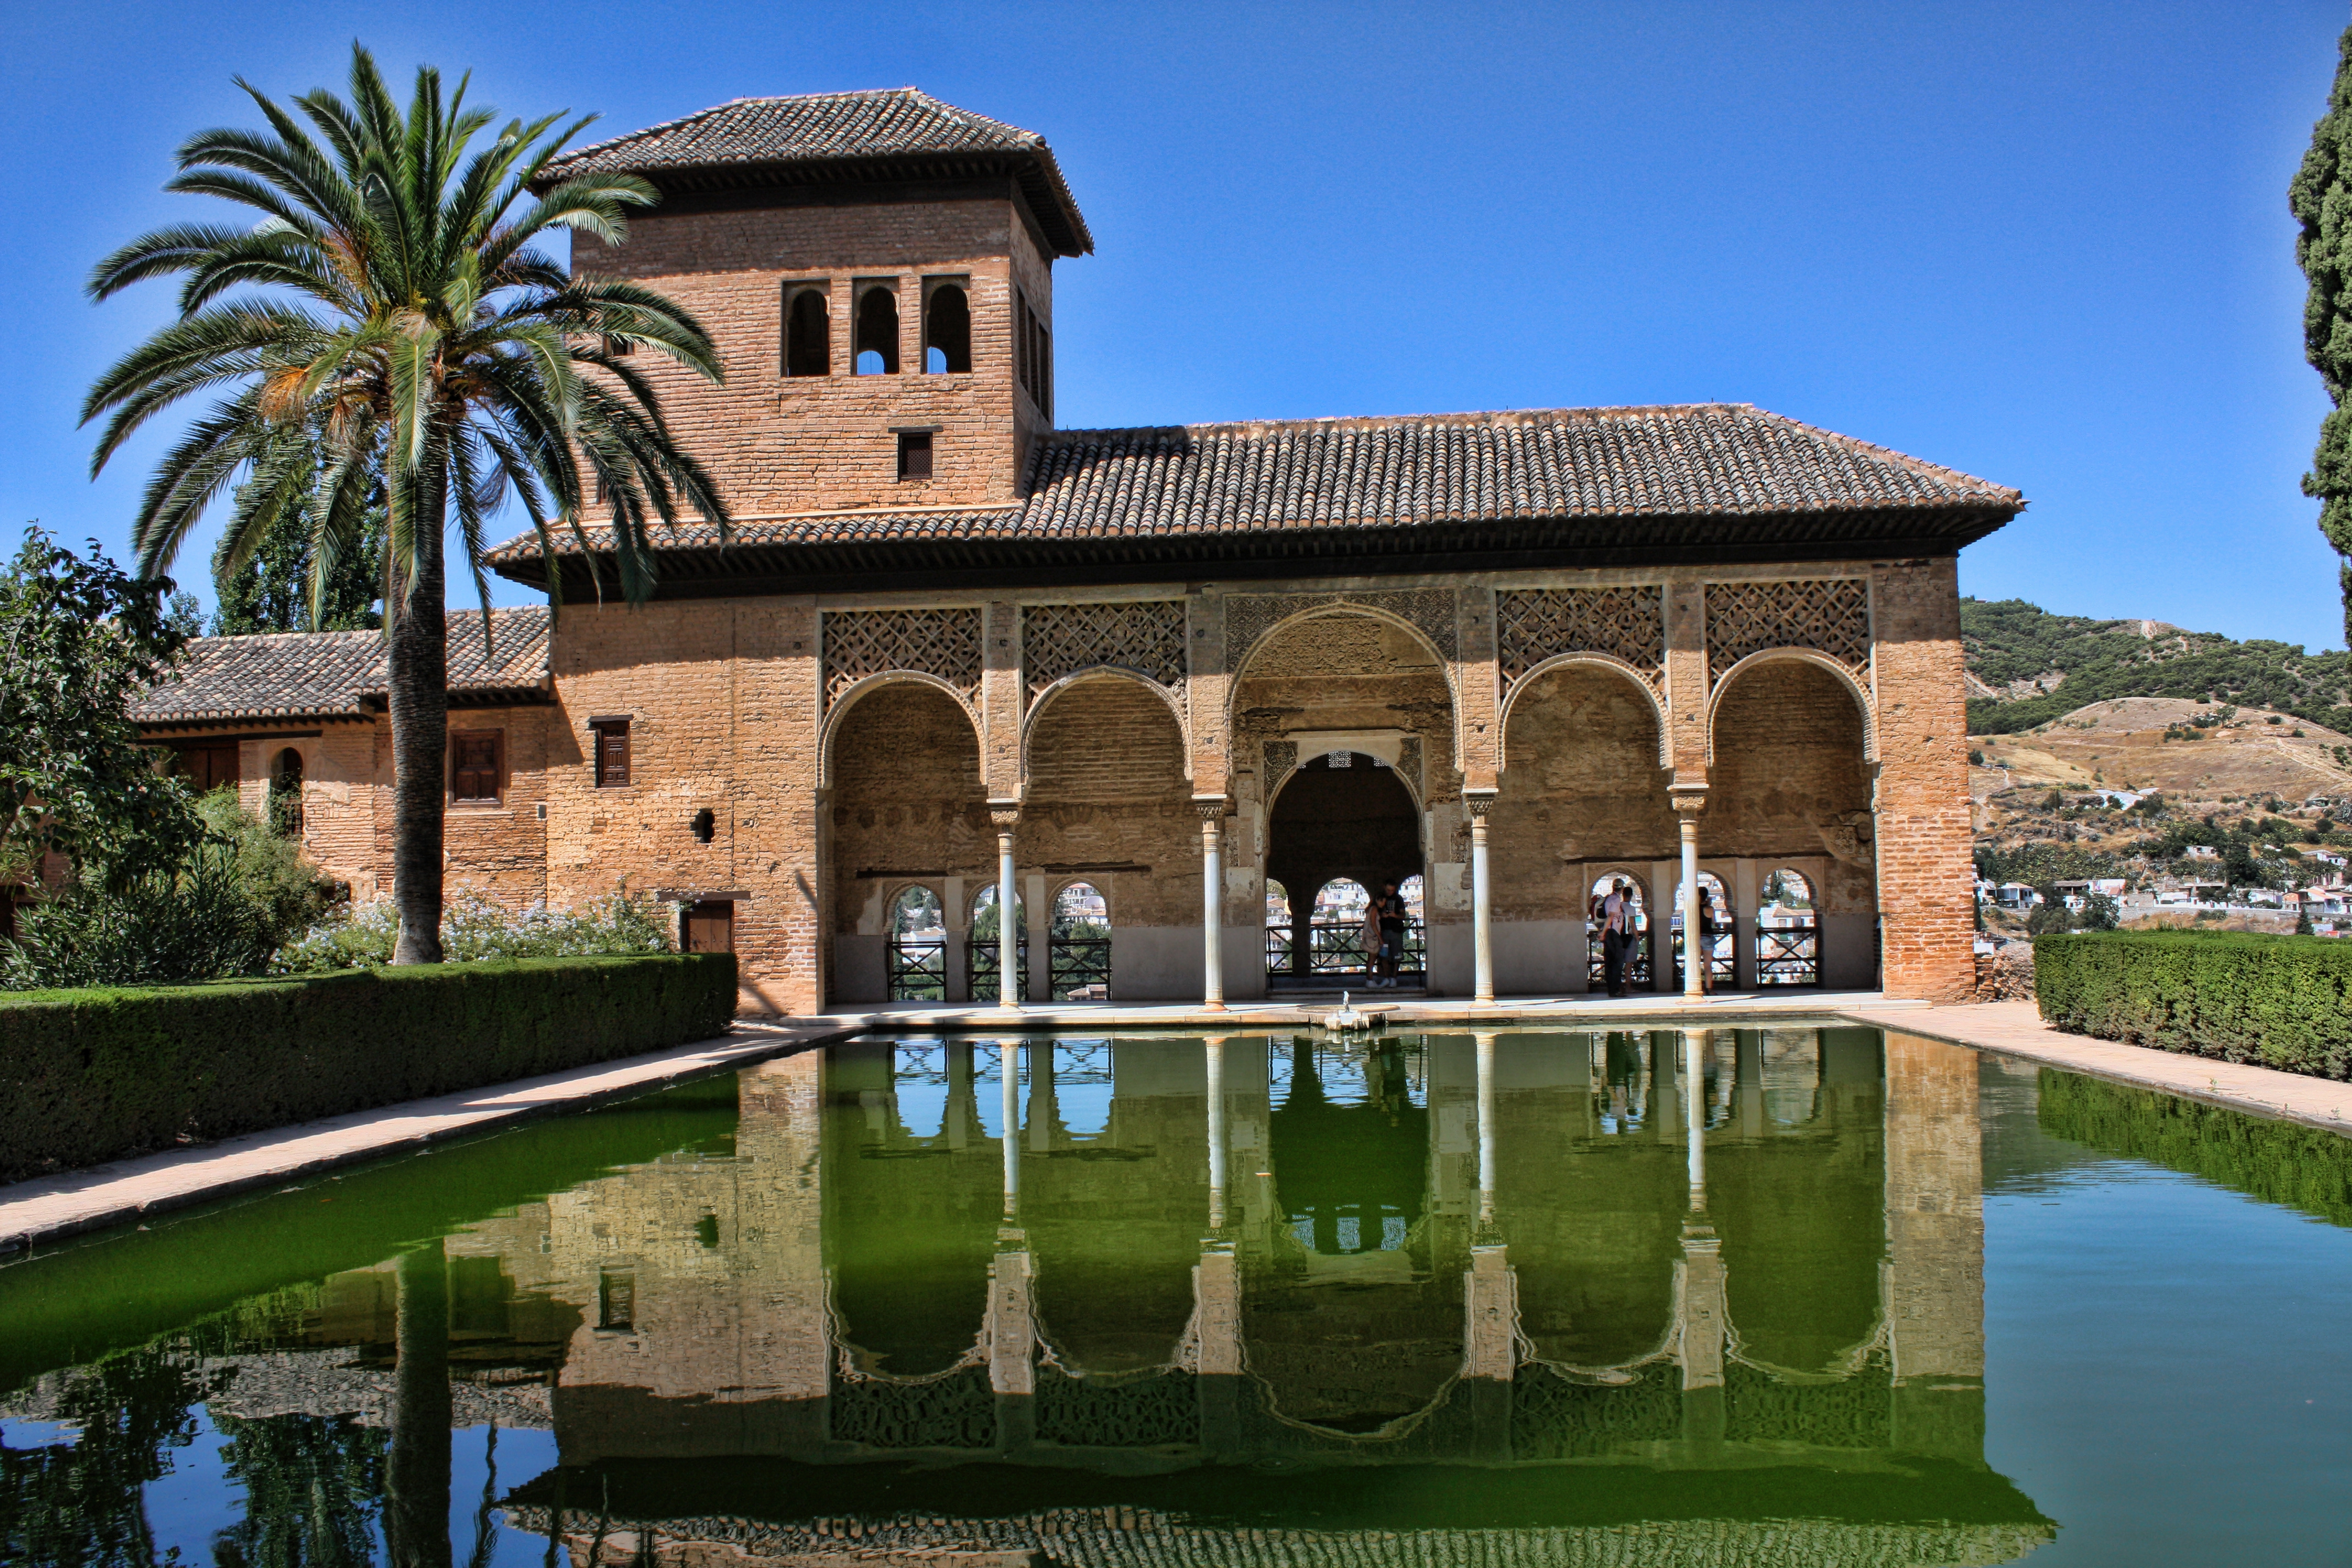 Alhambra Granada Spain Reflection 4272x2848